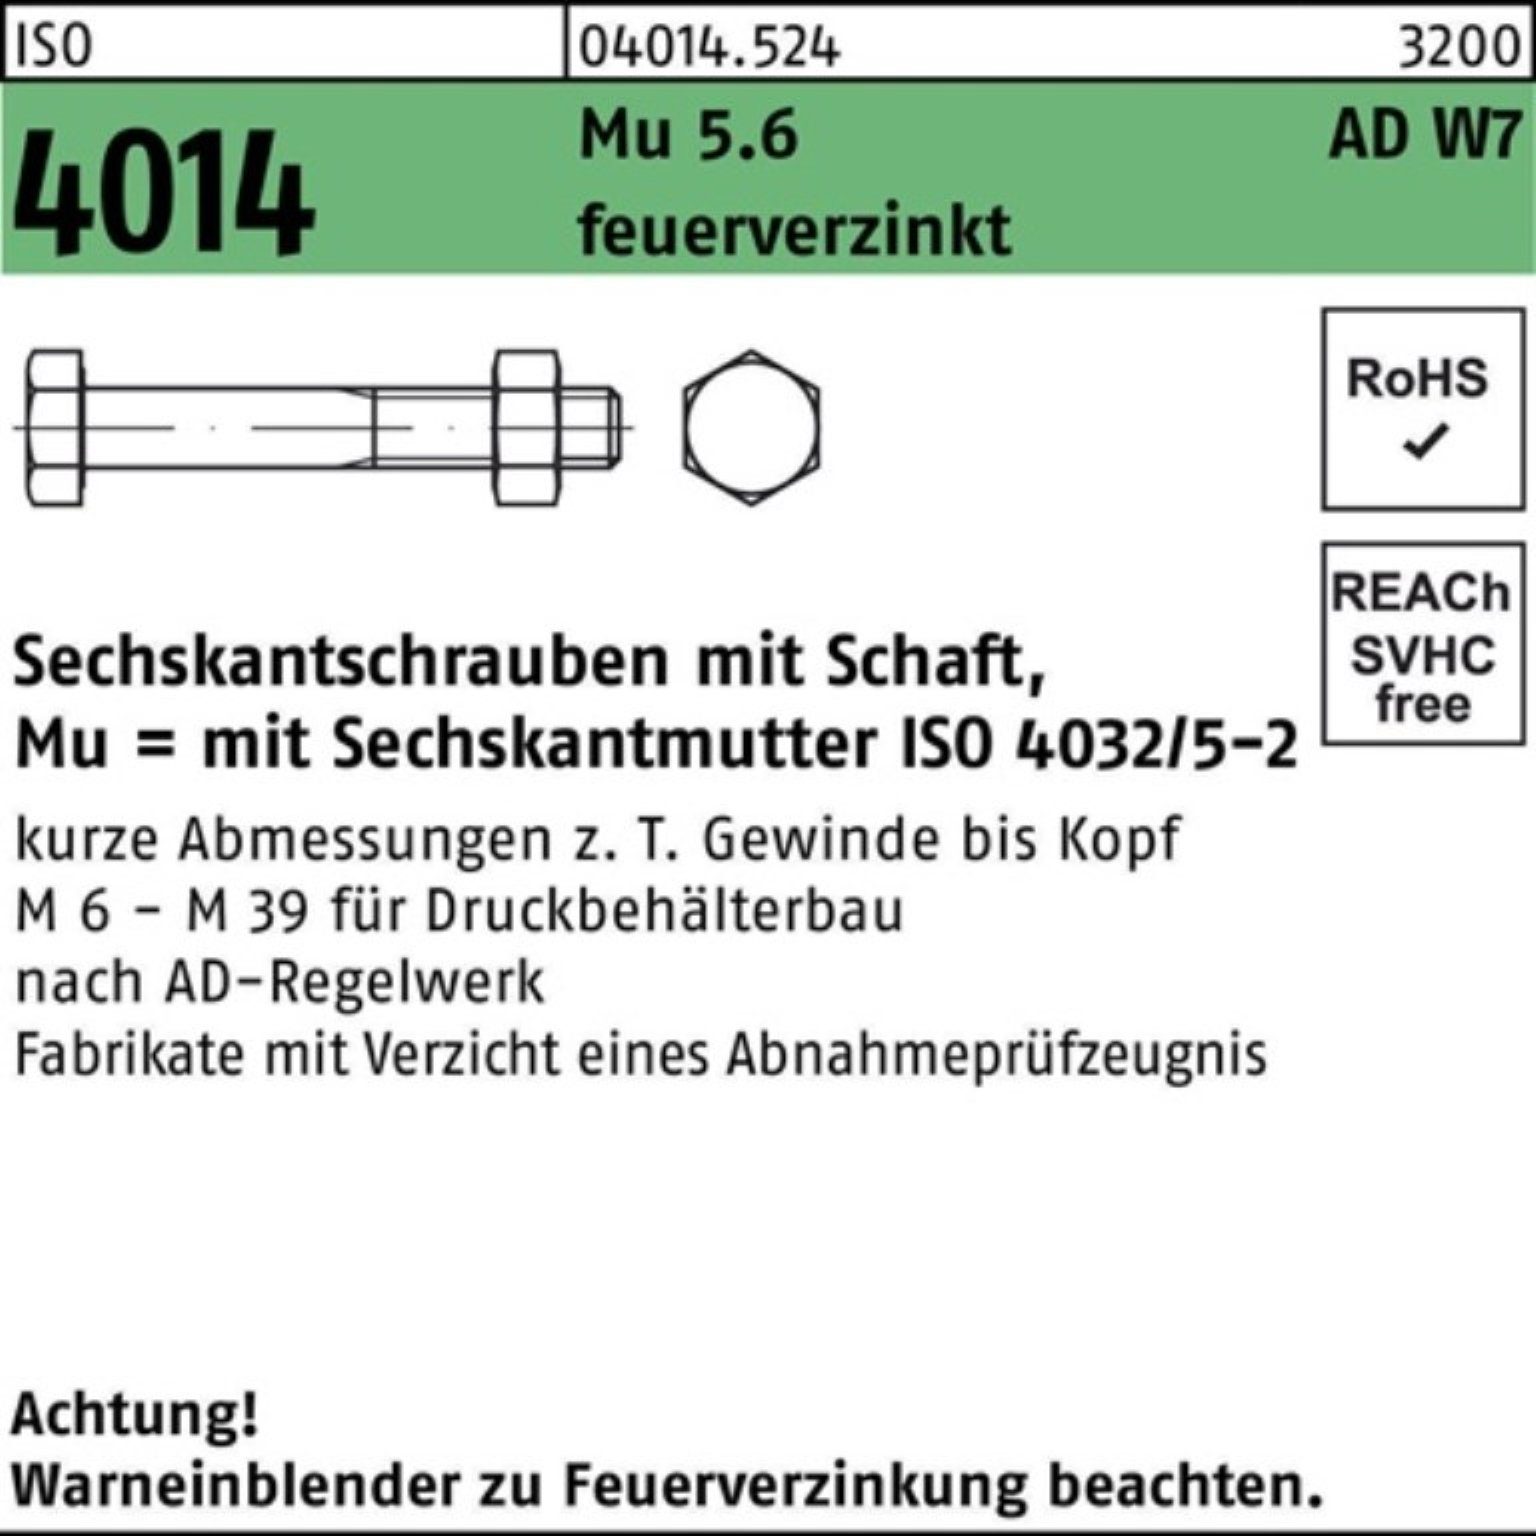 4014 Pack Sechskantschraube Sechskantschraube feuerv 5.6 110 ISO Bufab Schaft 100er W7 Mu M24x